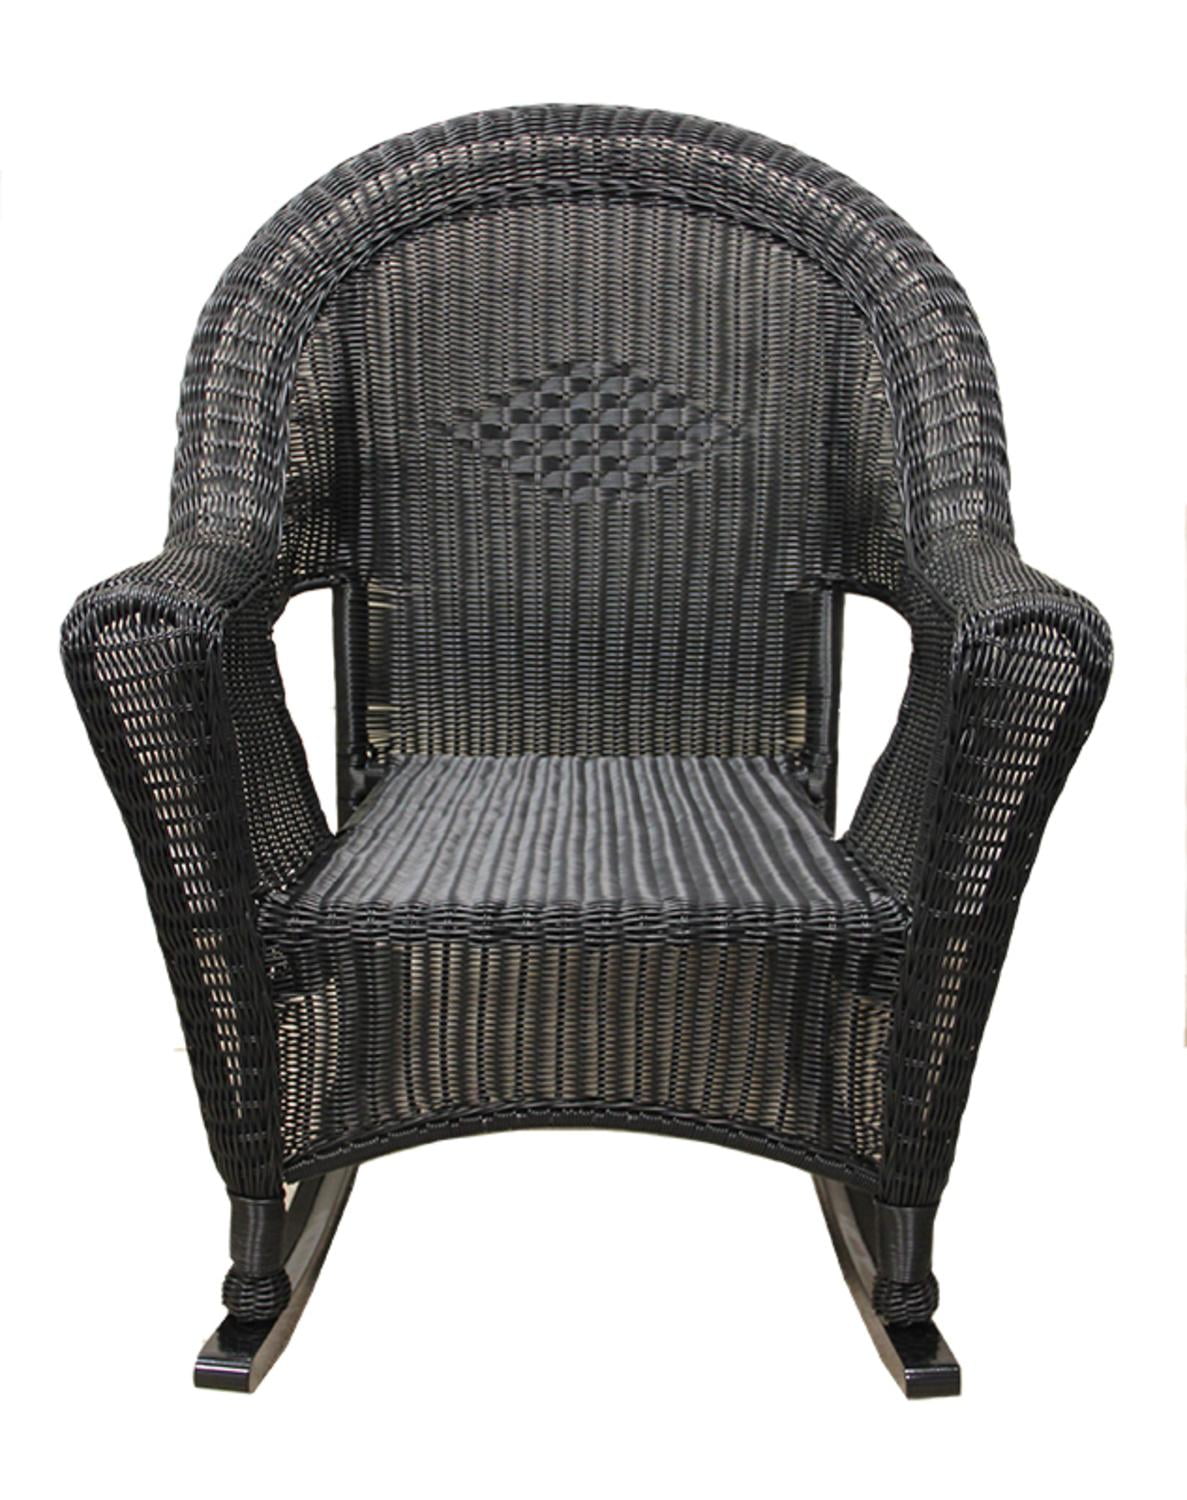 Black Resin Wicker Rocking Chair Patio Furniture - Walmart.com